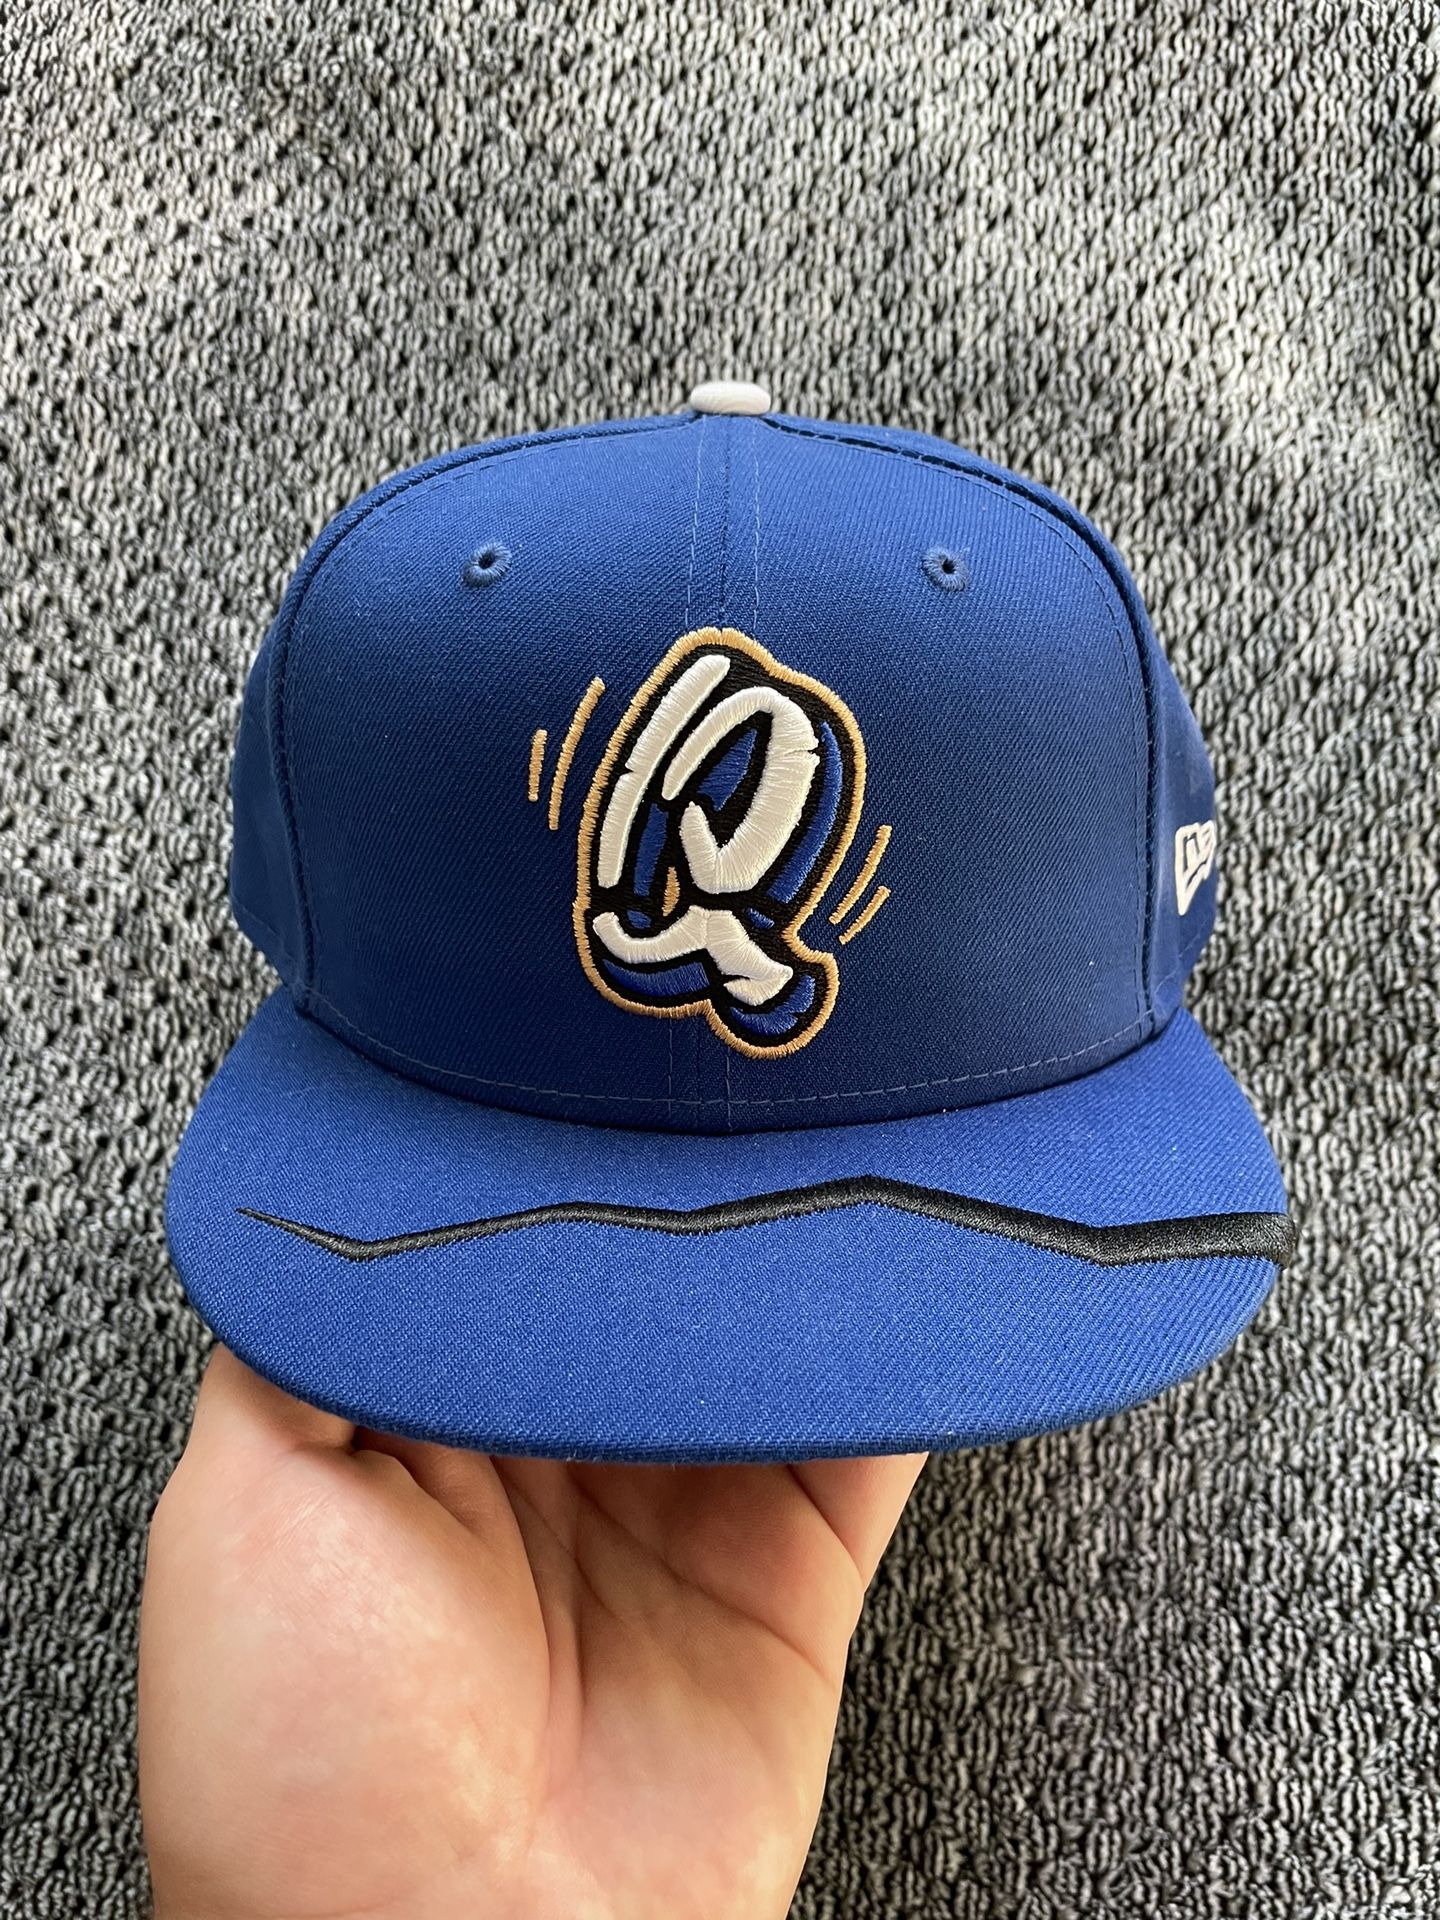 Rancho Cucamonga Quakes hat